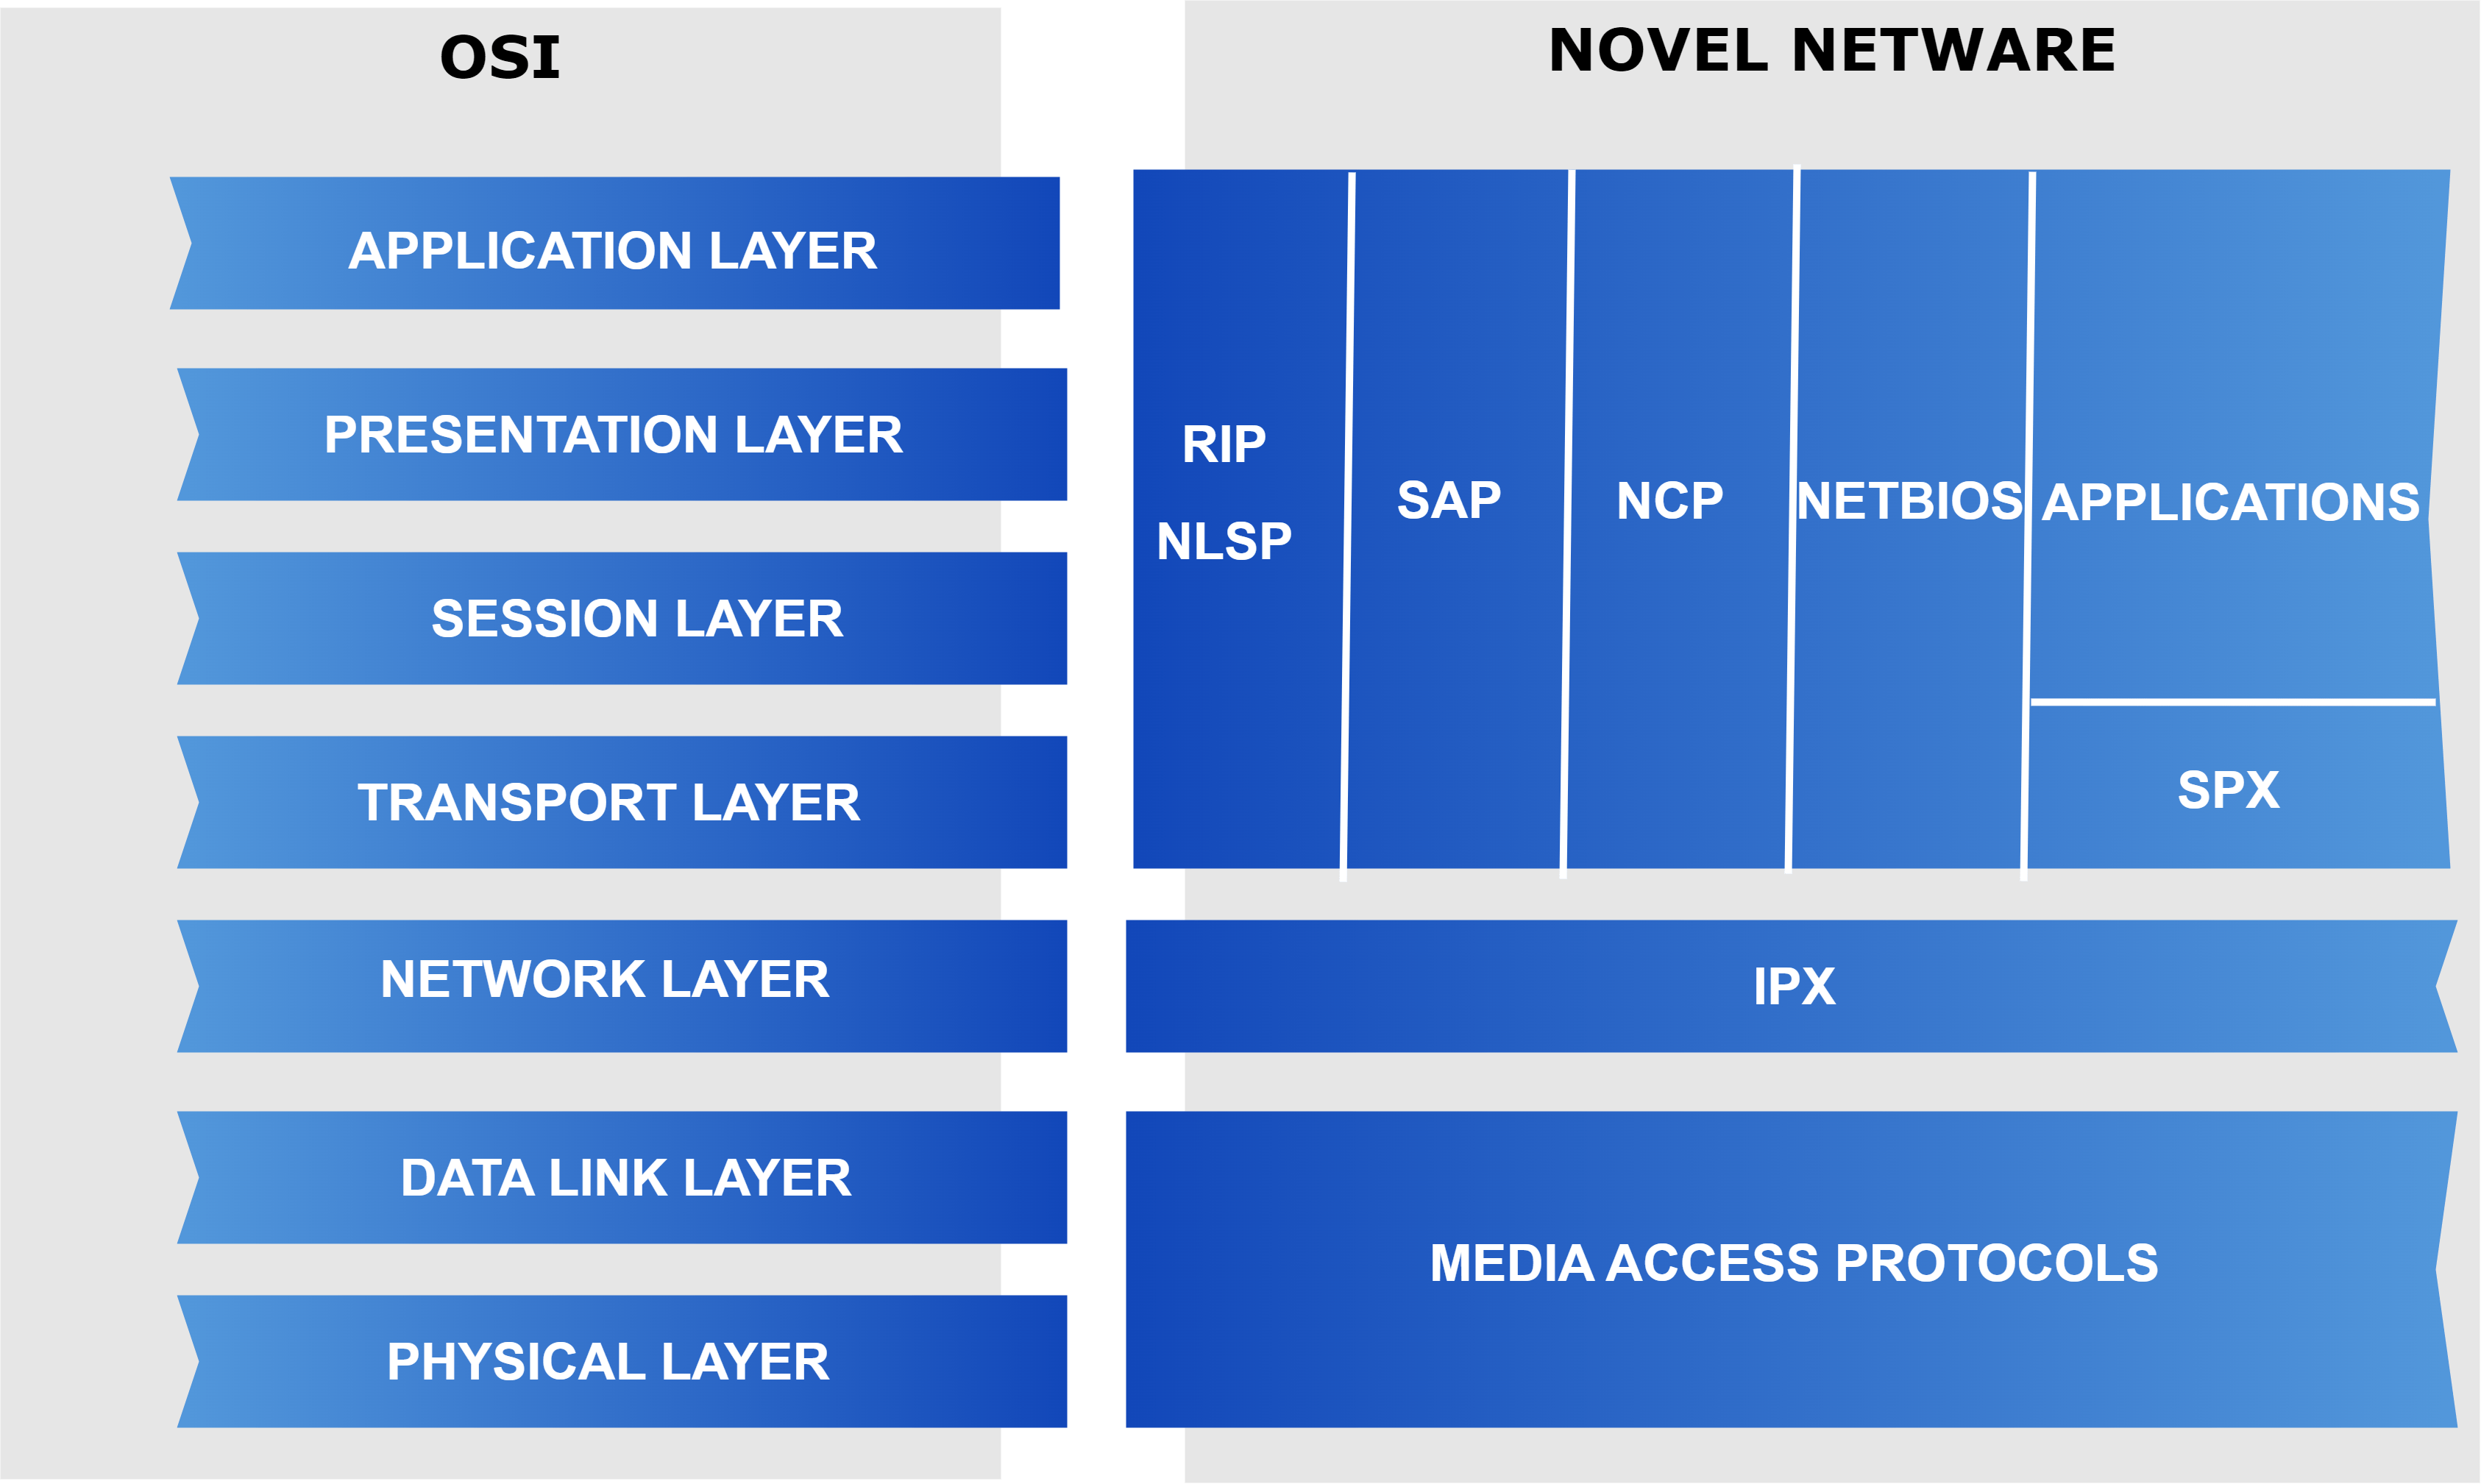 protocols of the novel netware protocol suite